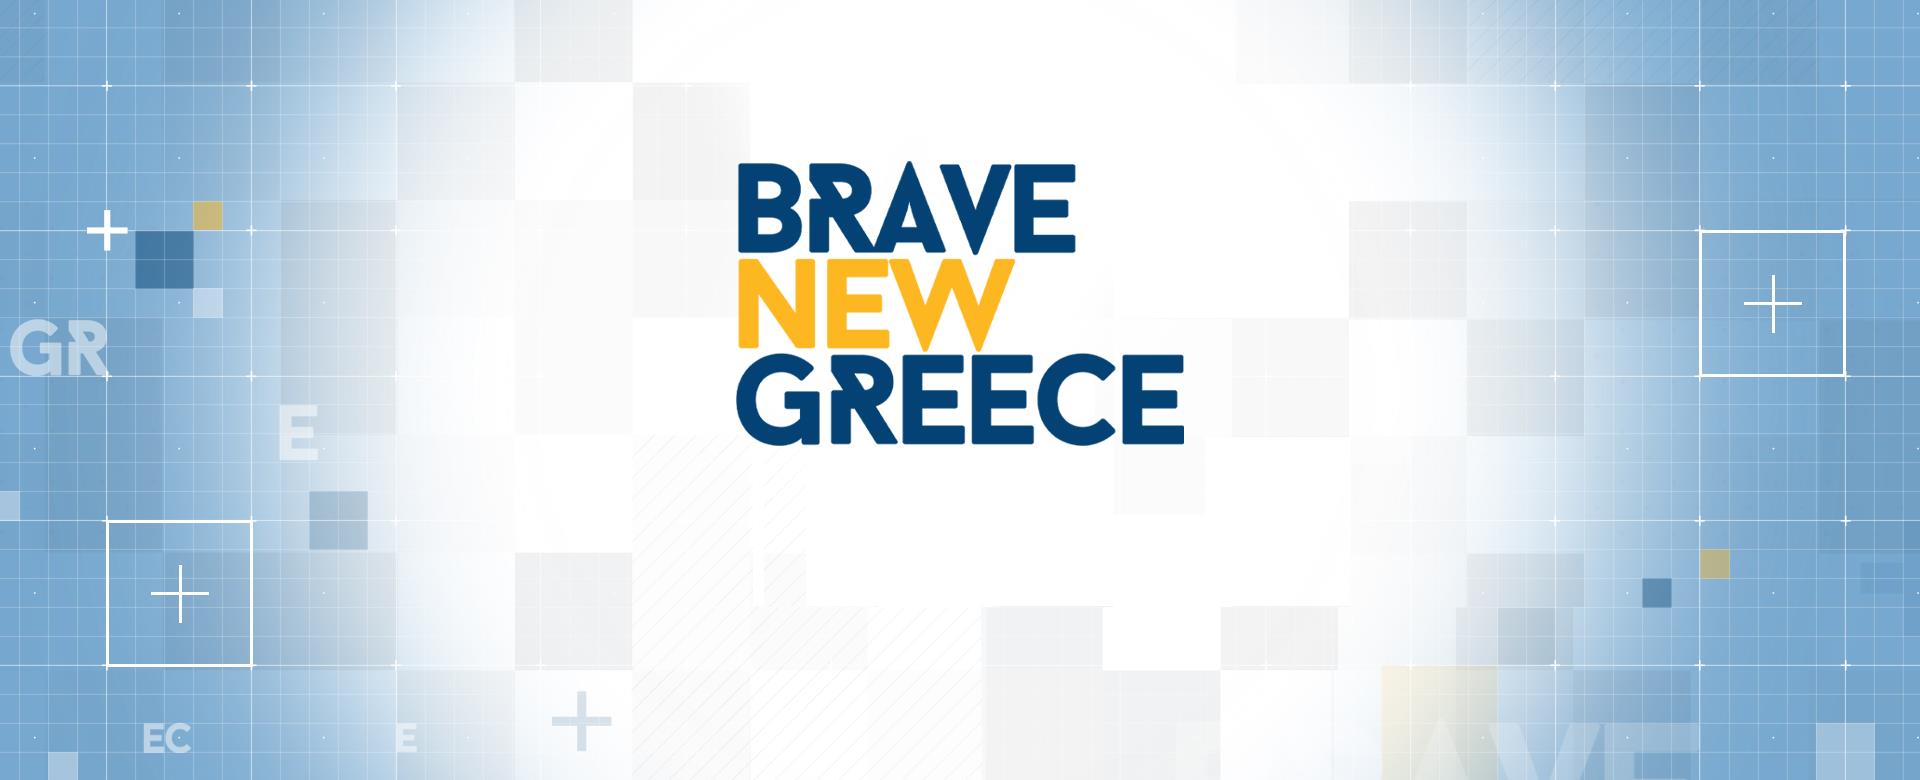 BRAVE NEW GREECE